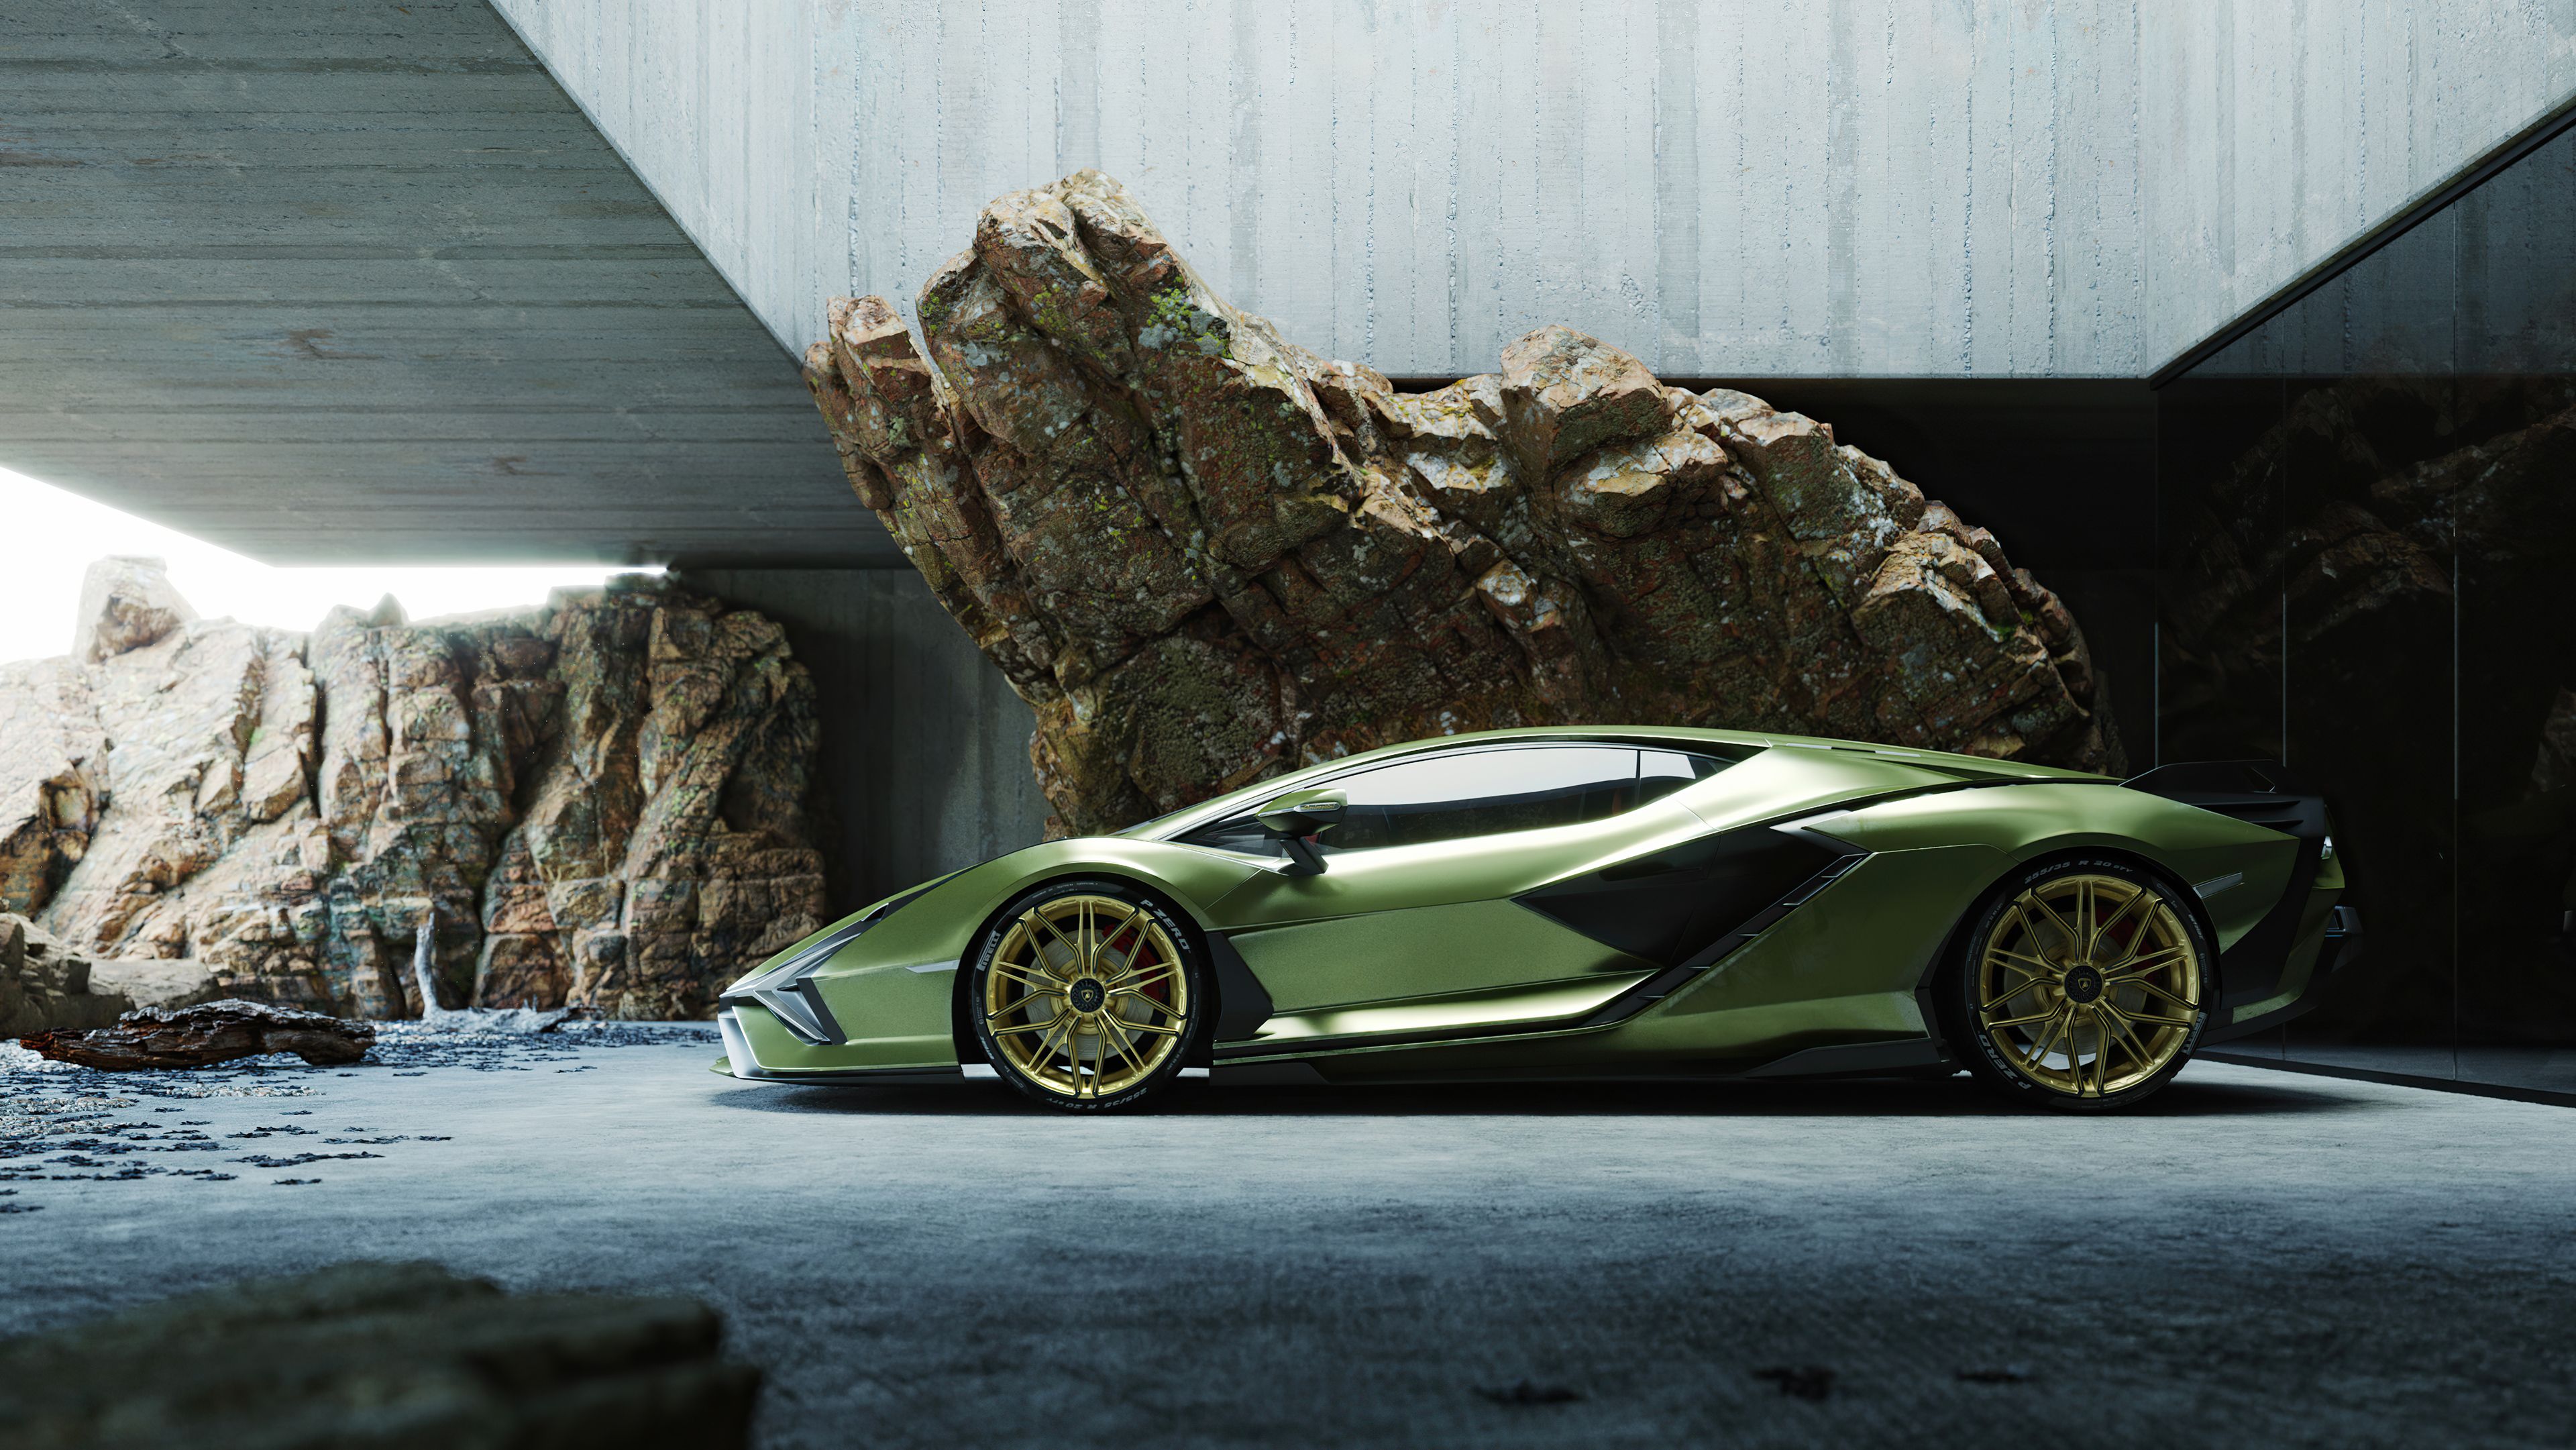 Lamborghini Sian, HD Cars, 4k Wallpaper, Image, Background, Photo and Picture